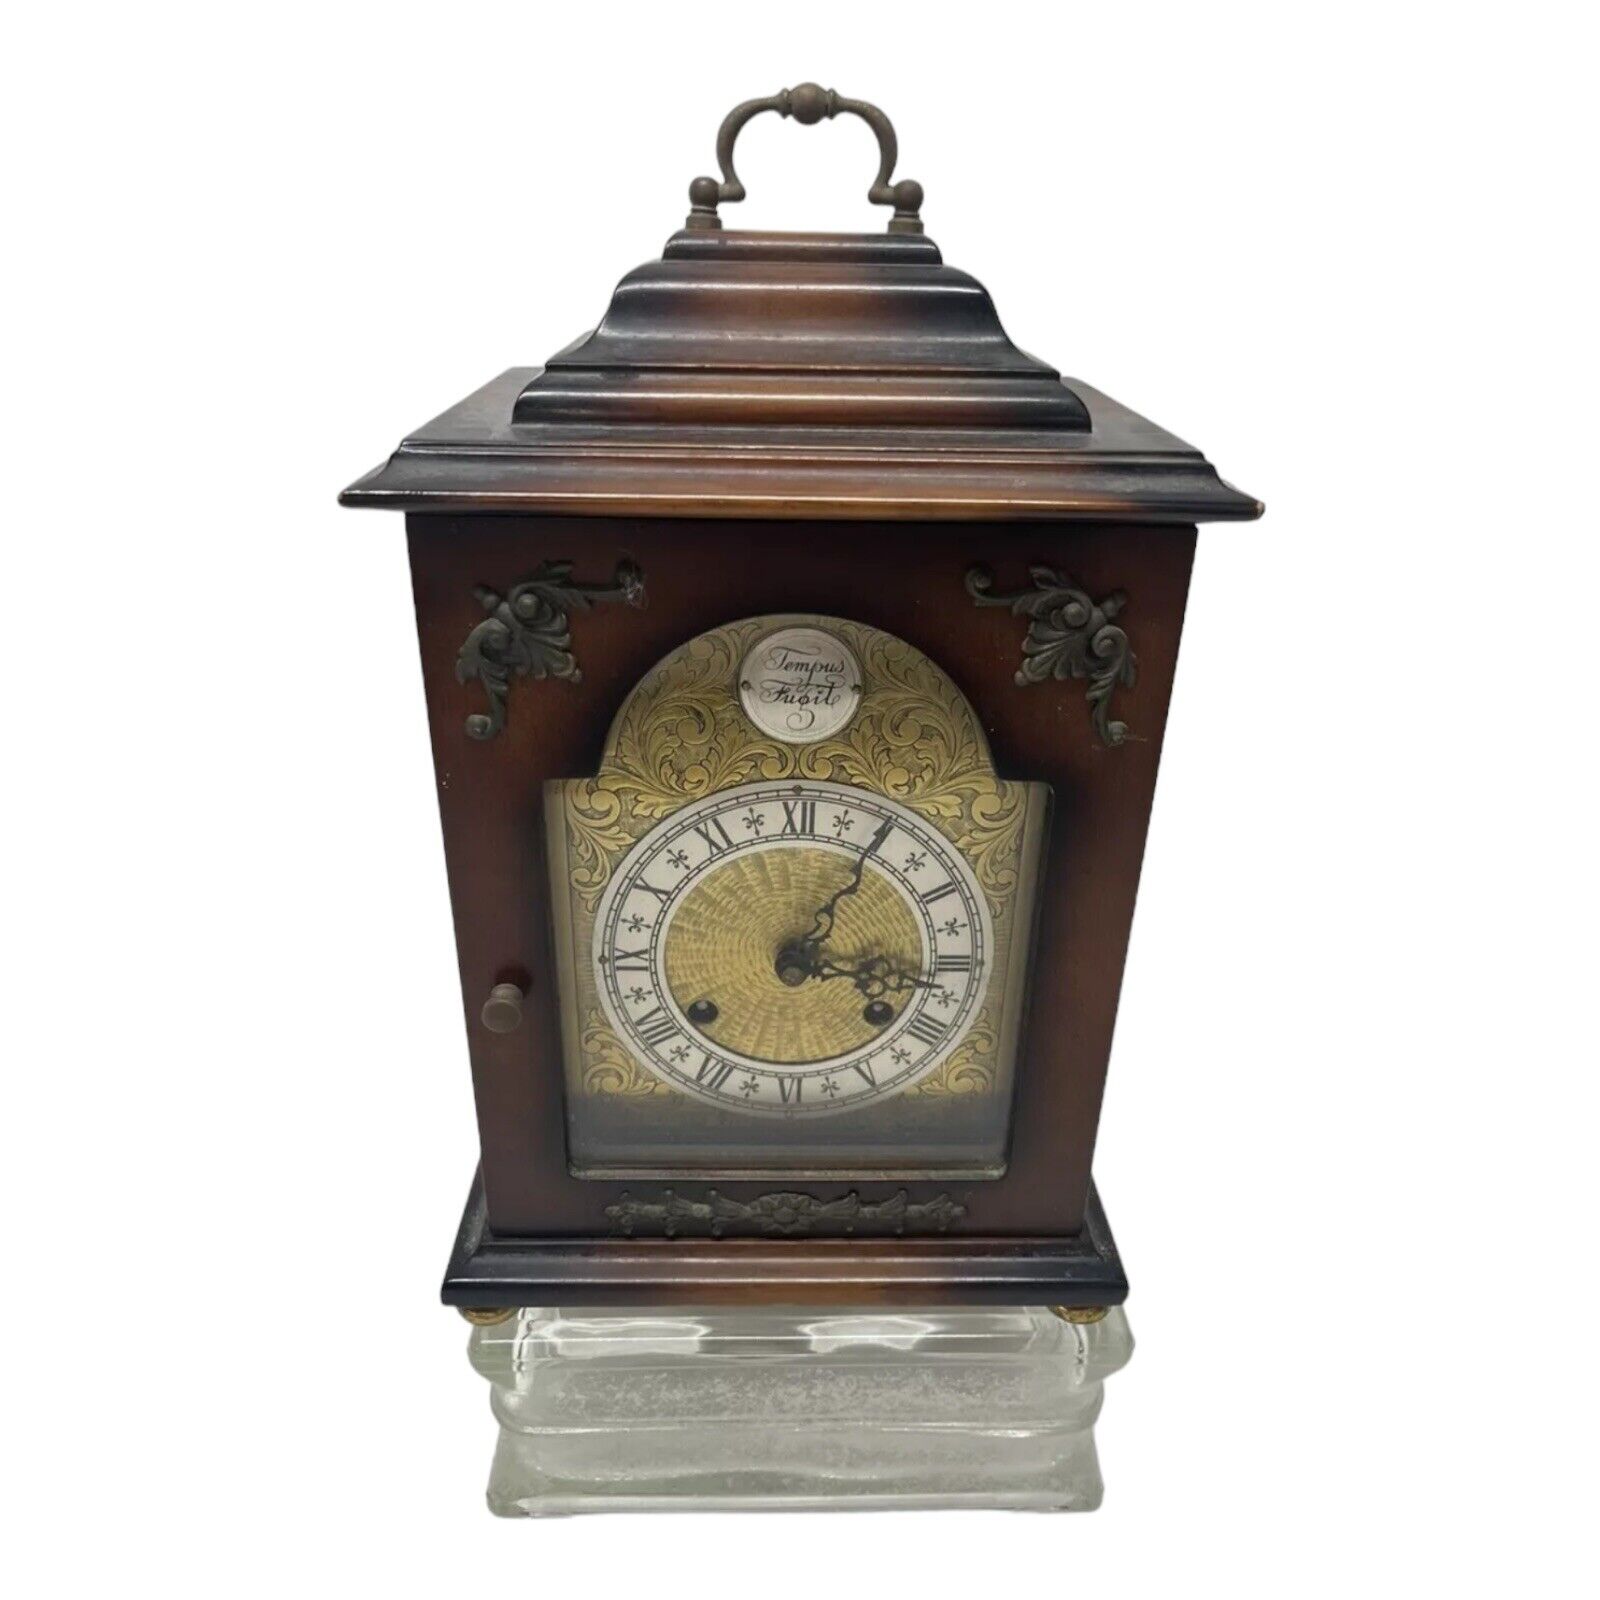 Emperor Tempus Fugit FRANZ HERMLE Westminster Chime Mantel Clock